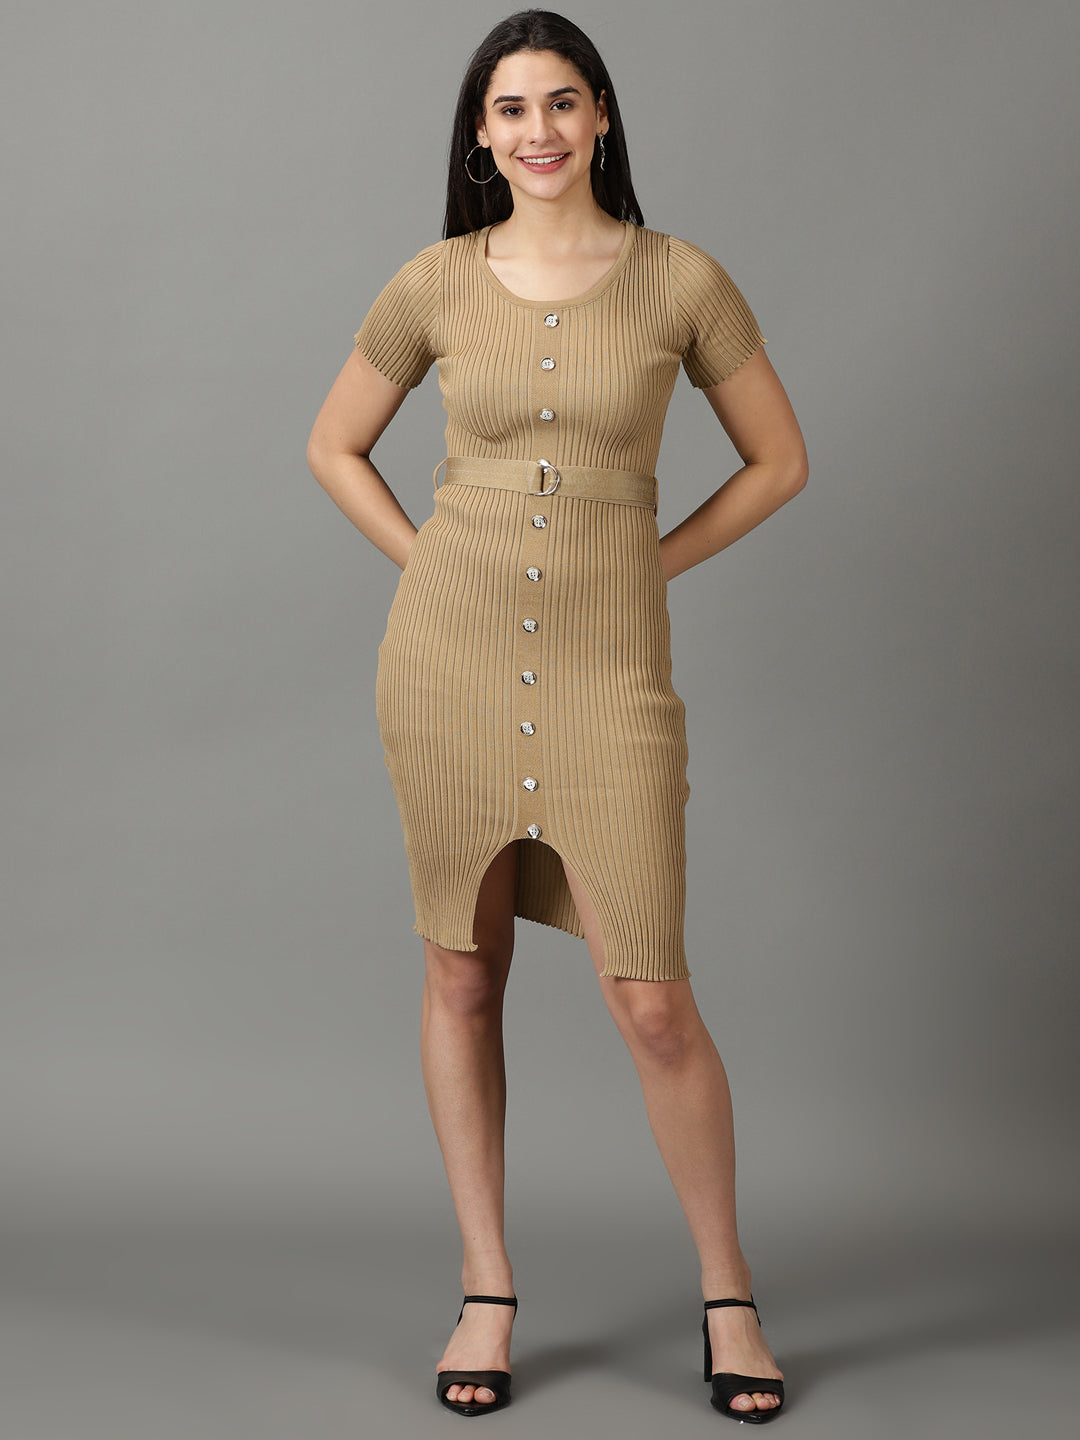 Women's Khaki Solid Bodycon Dress